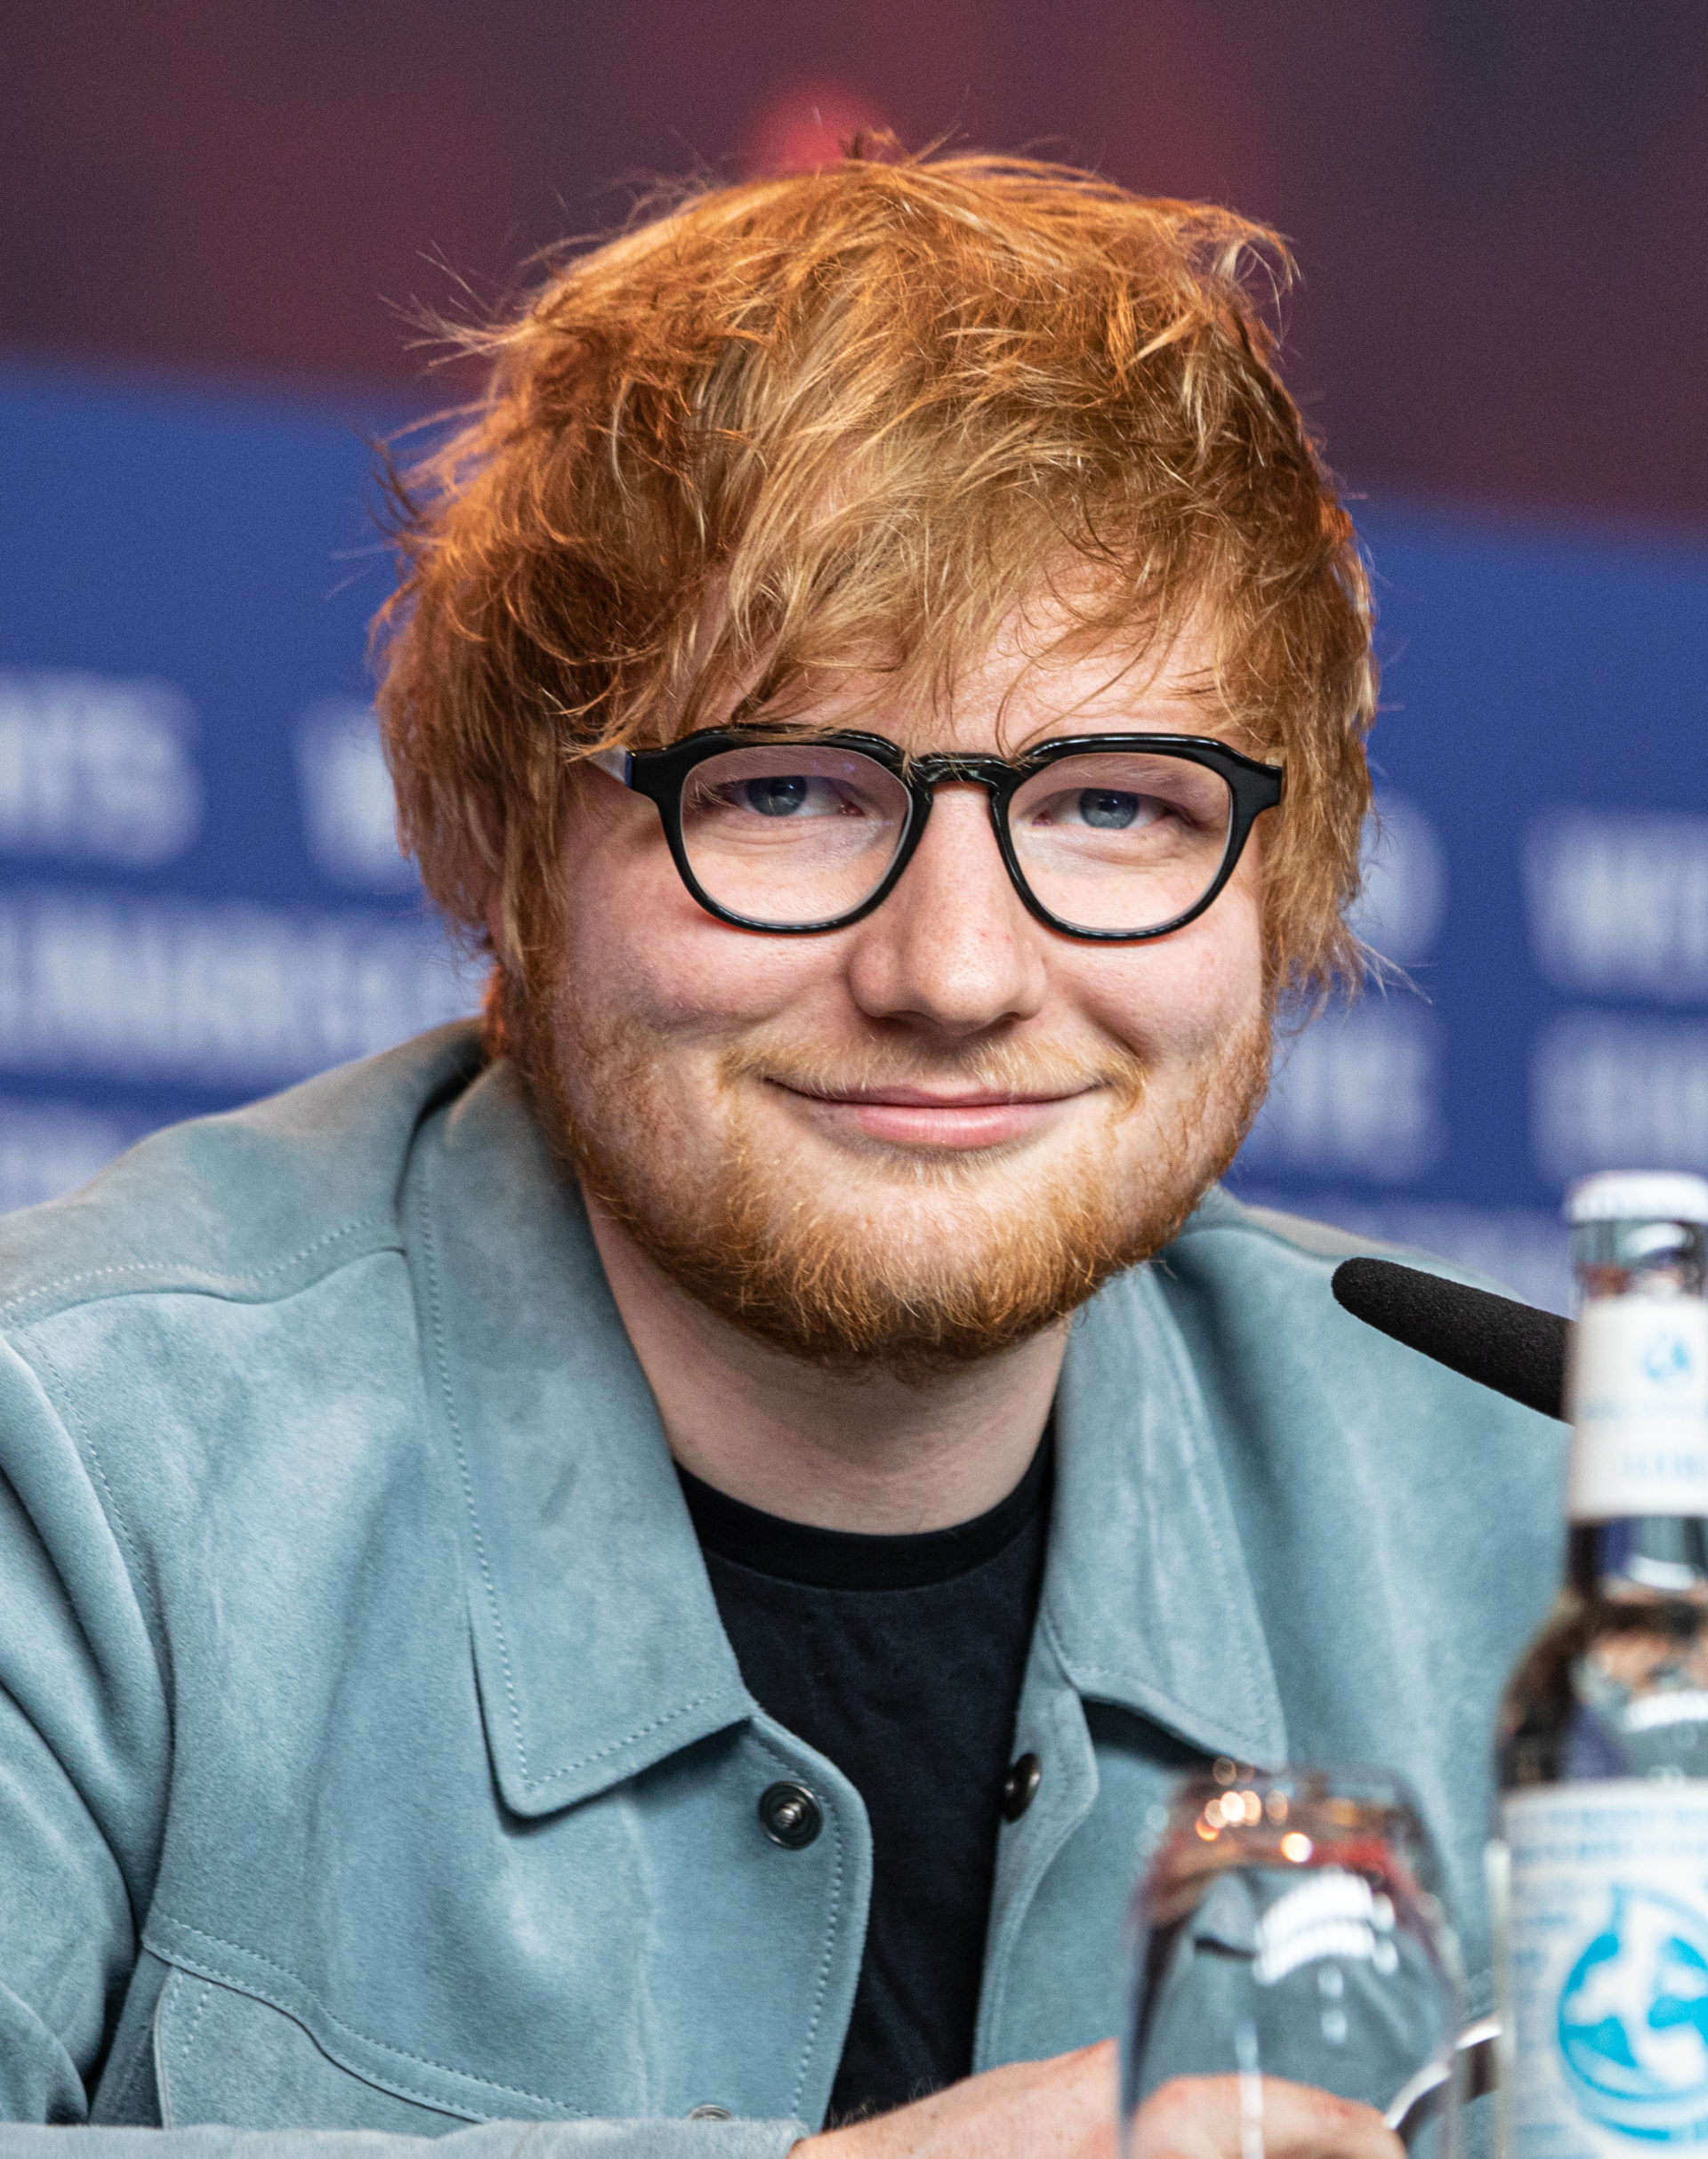 Ed Sheeran Net Worth, Relation, Age, Full Bio & More